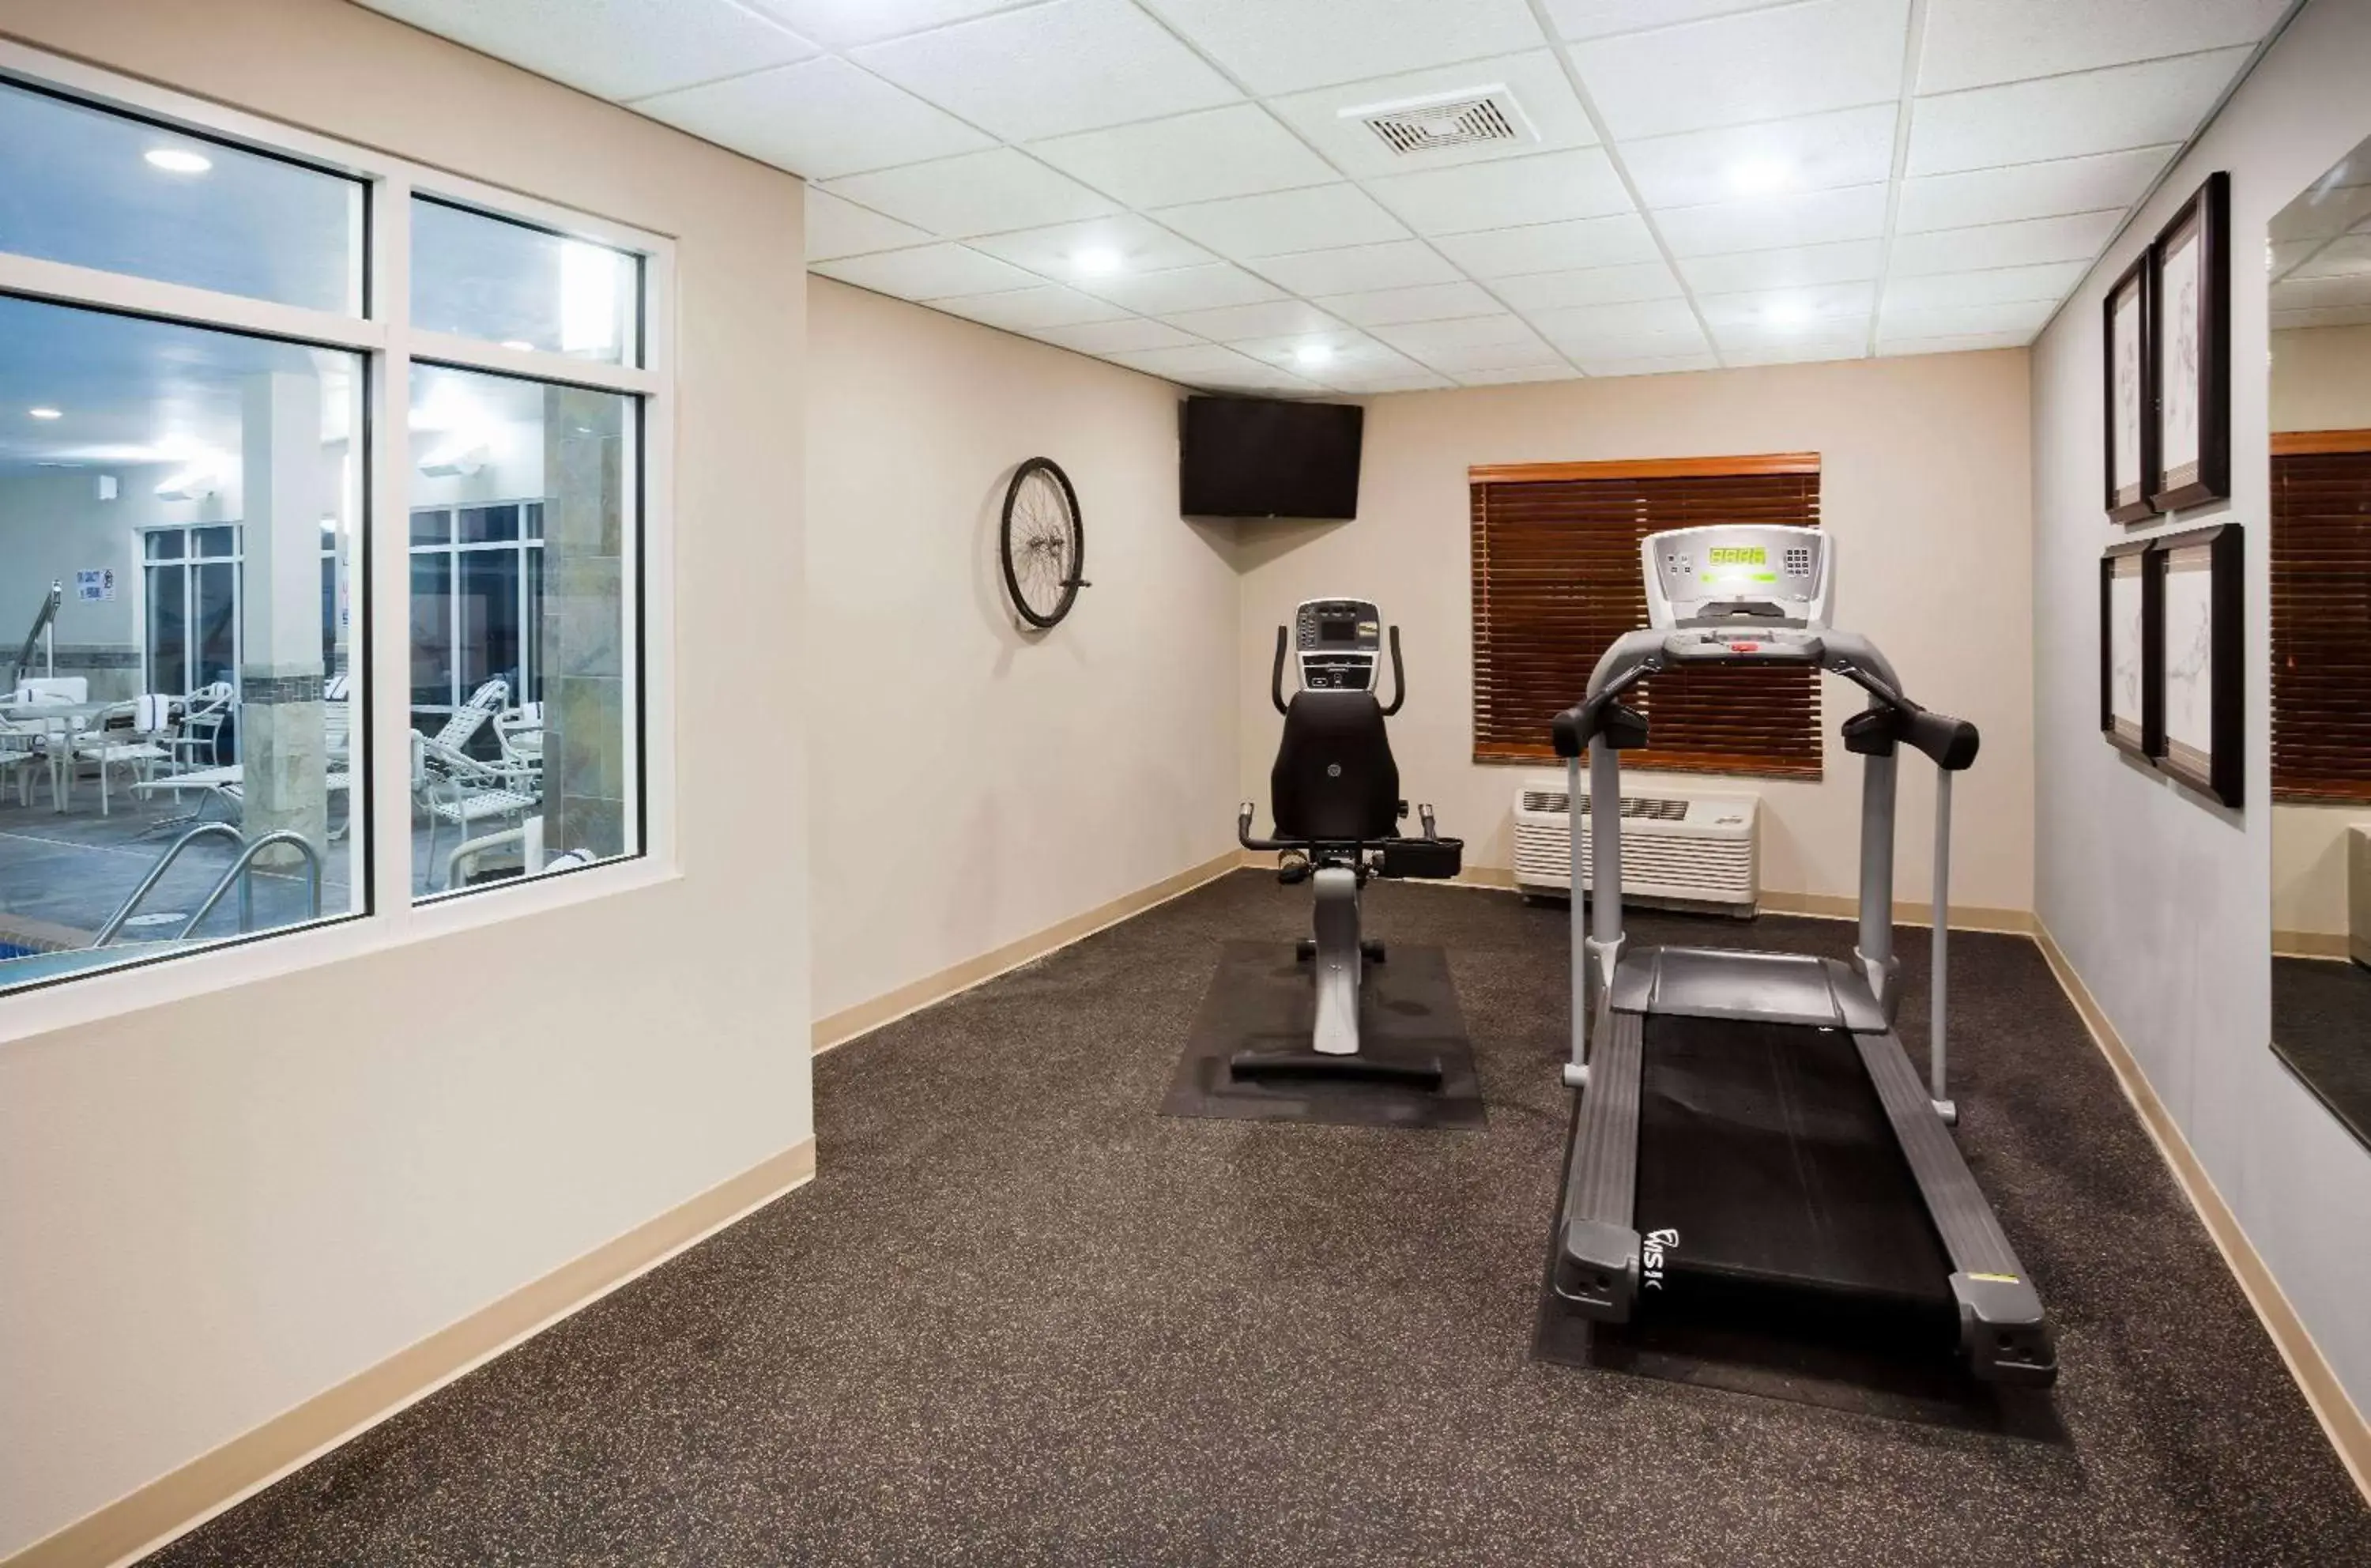 Fitness centre/facilities, Fitness Center/Facilities in AmericInn by Wyndham DeWitt